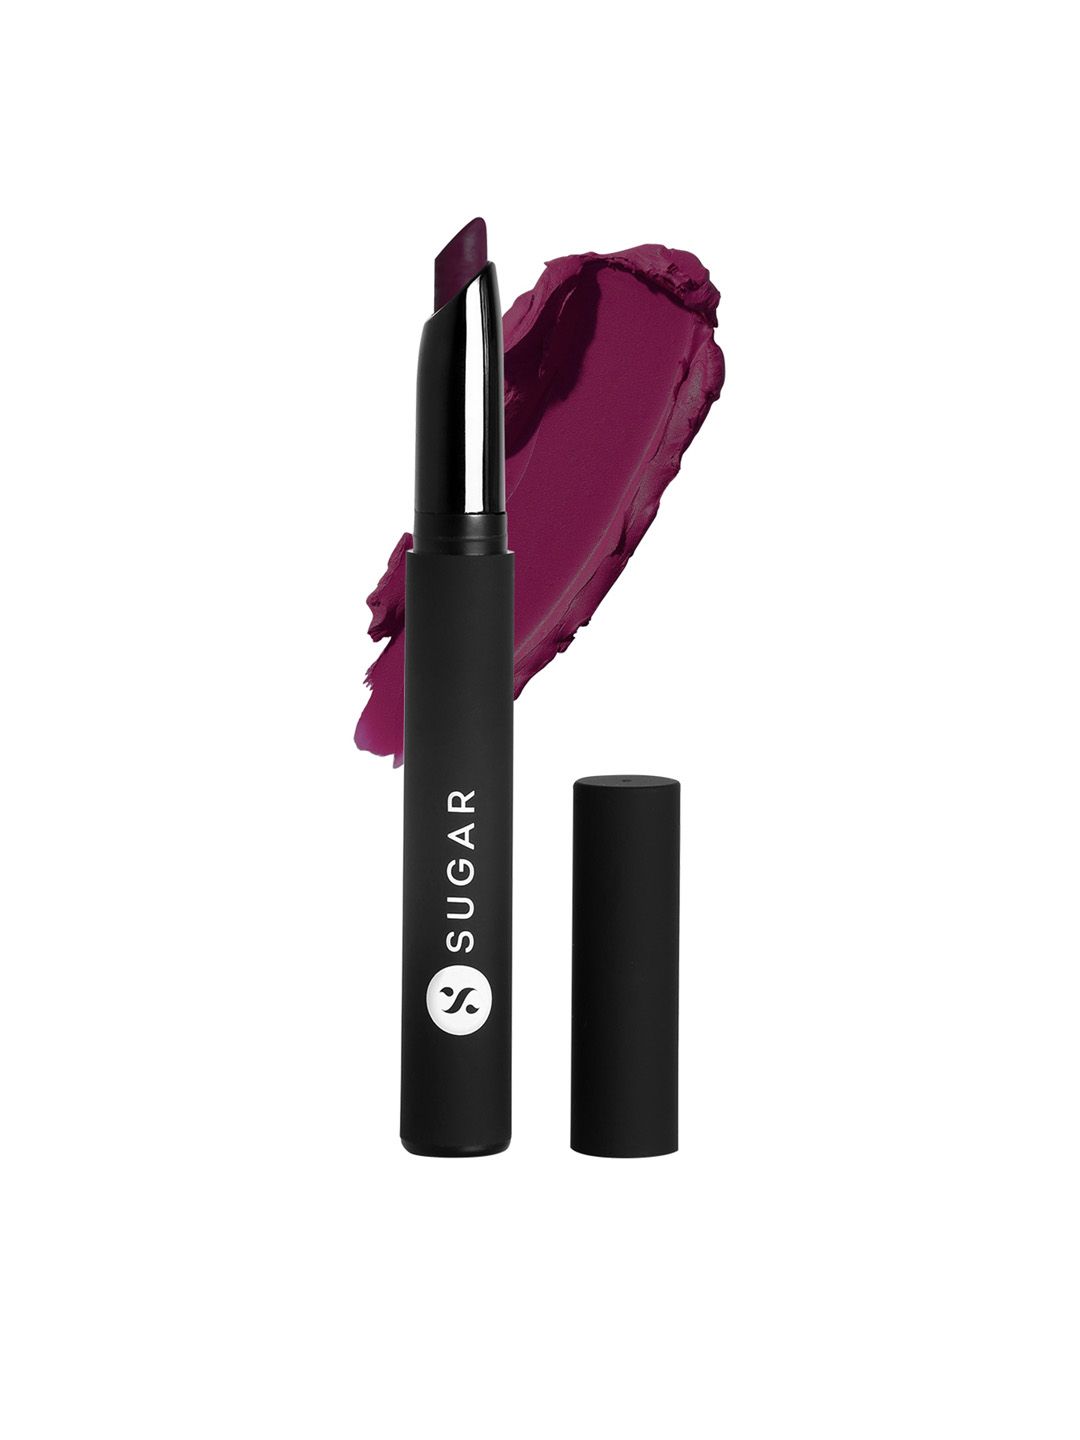 SUGAR Cosmetics Matte Attack Transferproof Lipstick - 03 The Grandberries (Dark Berry) Price in India